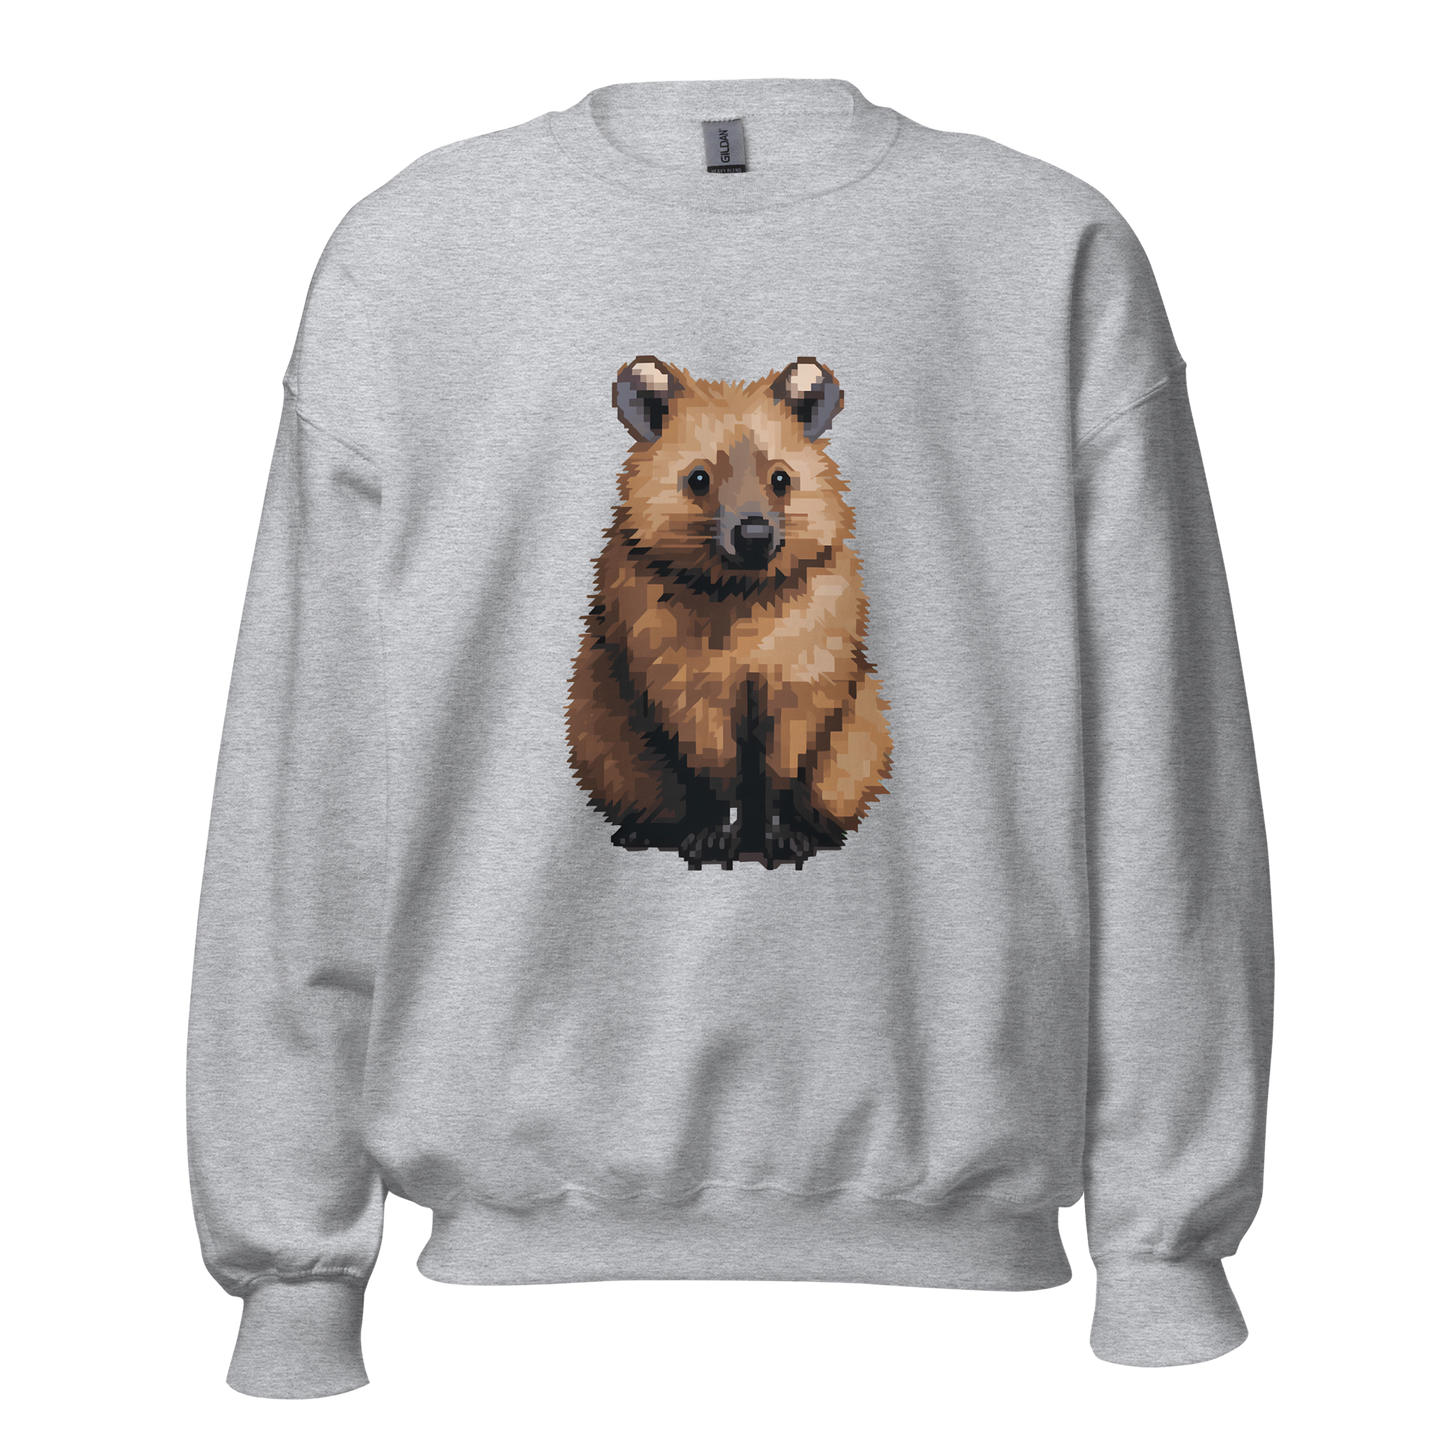 Adorable Quokka Graphic Sweatshirt: Embrace Cuteness and Comfort